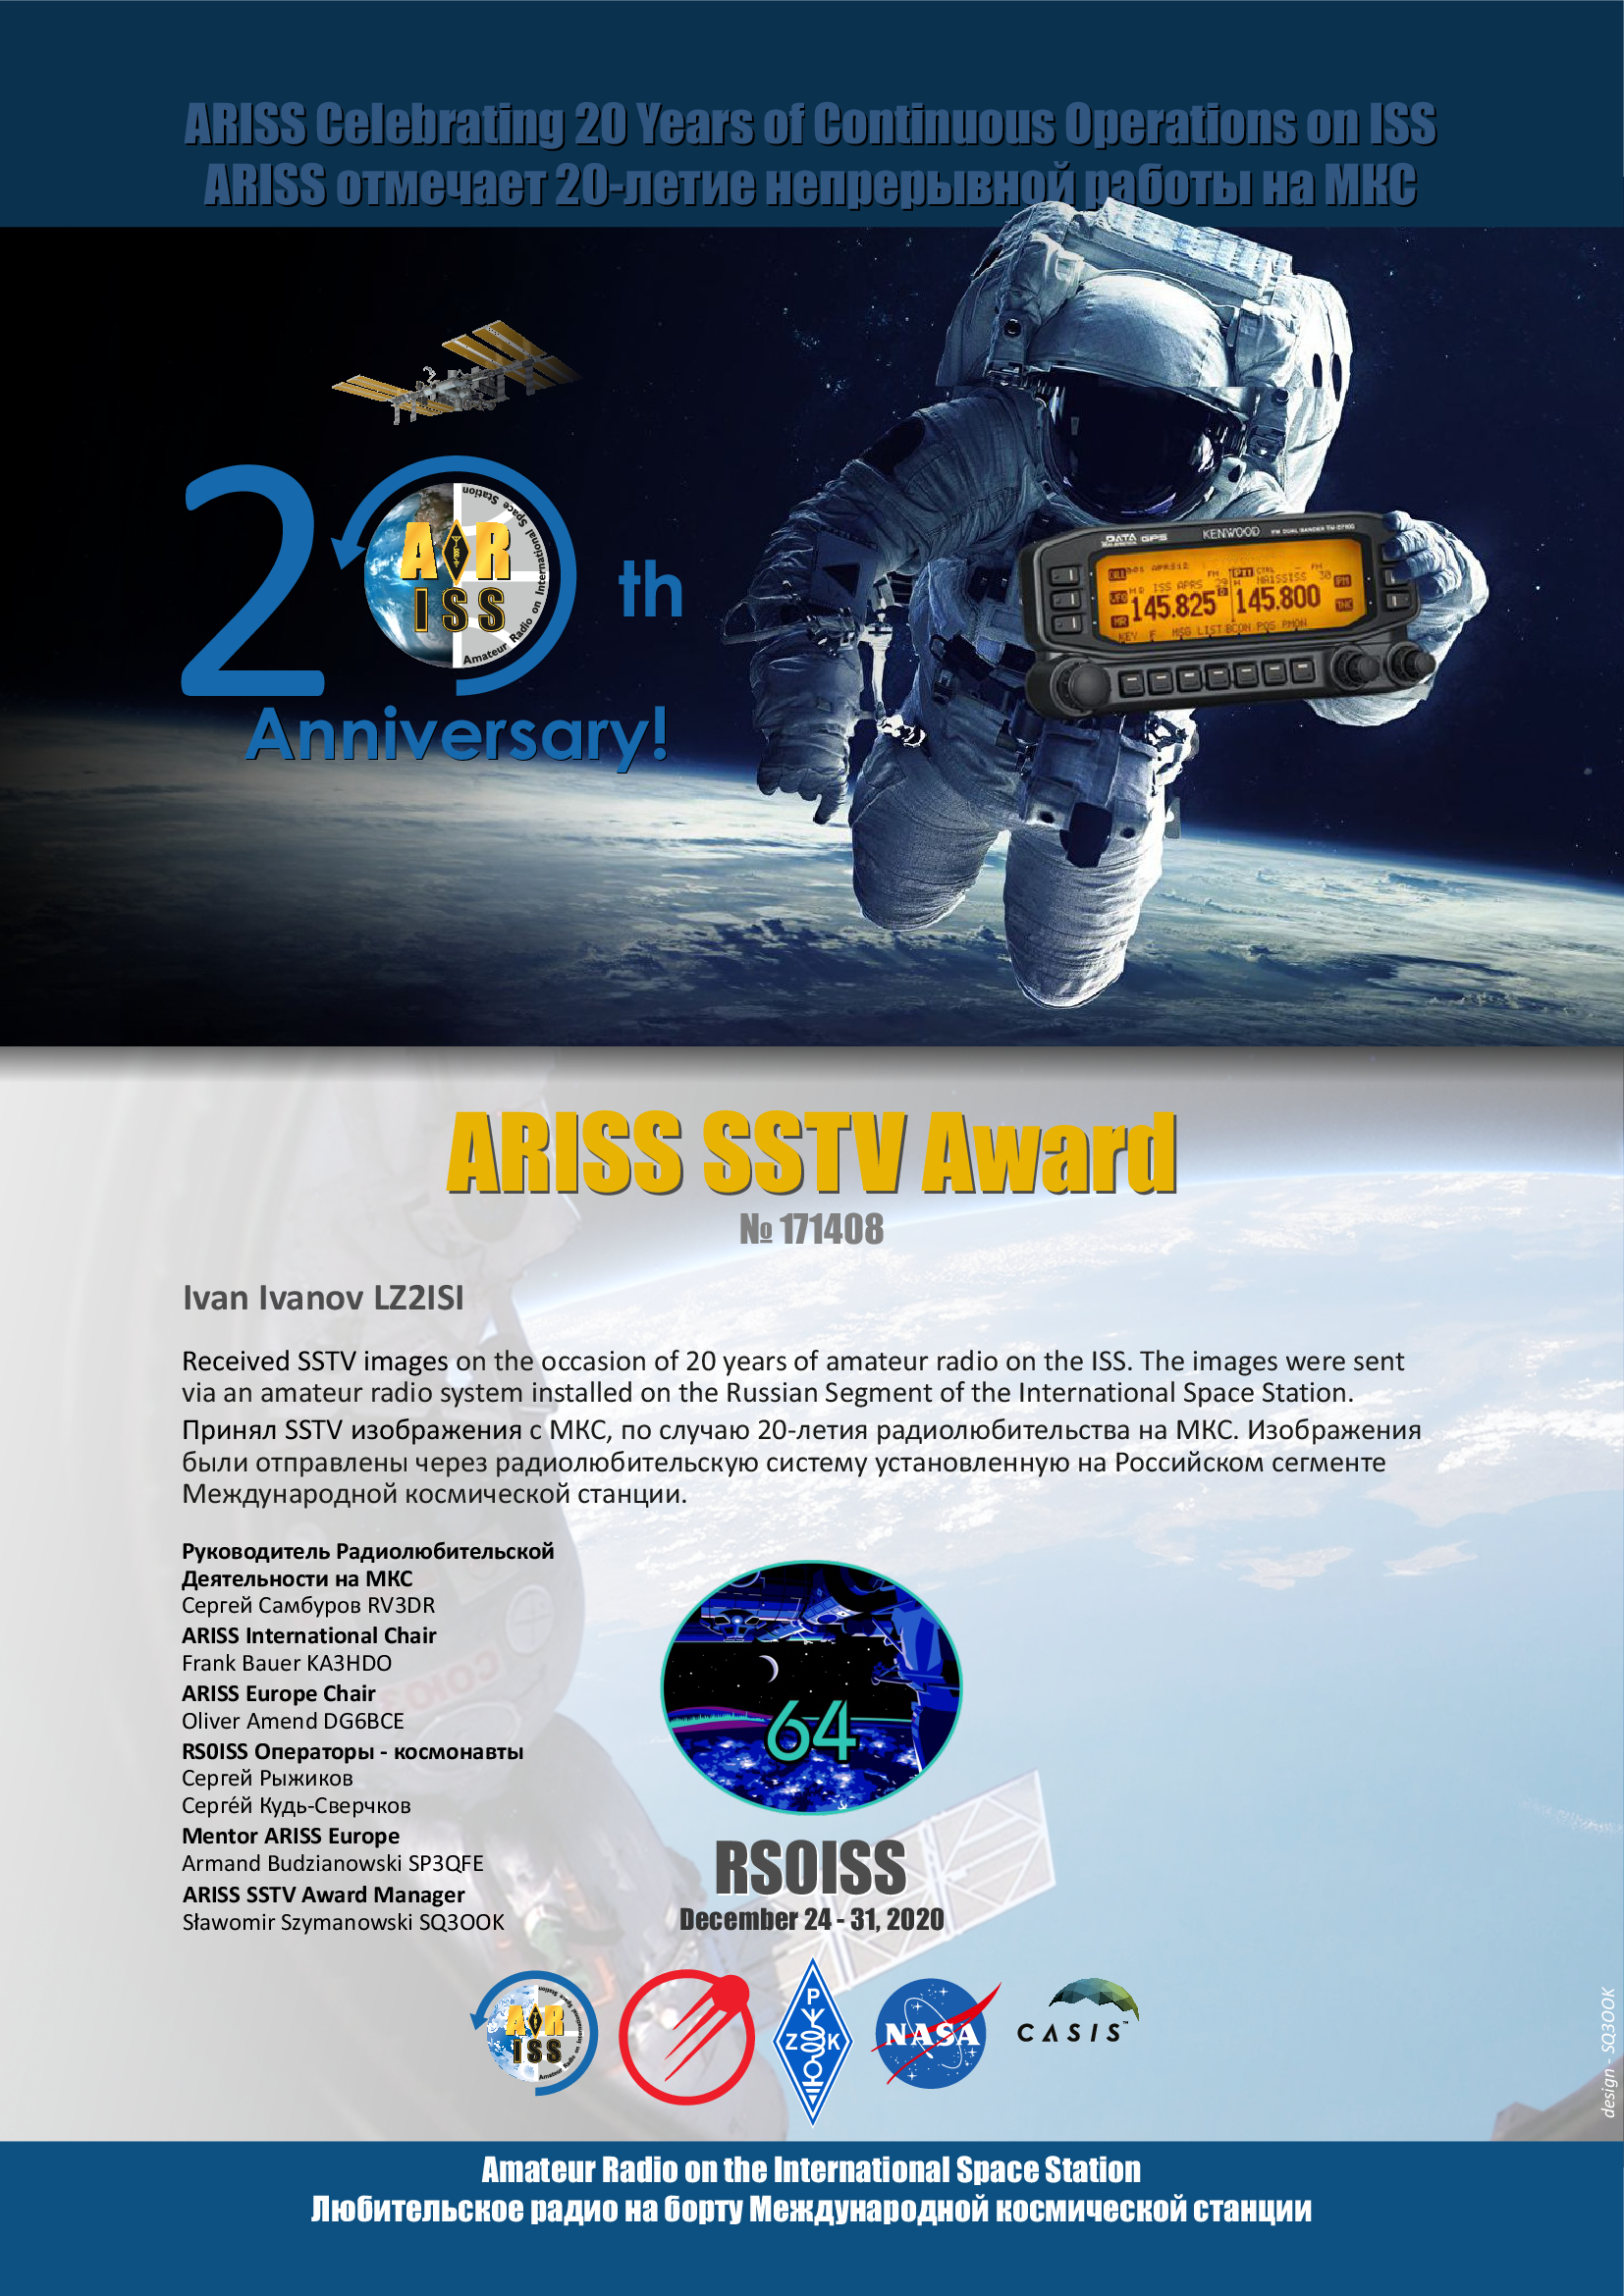 ARISS SSTV Award "ARISS 20th Anniversary Celebrations"